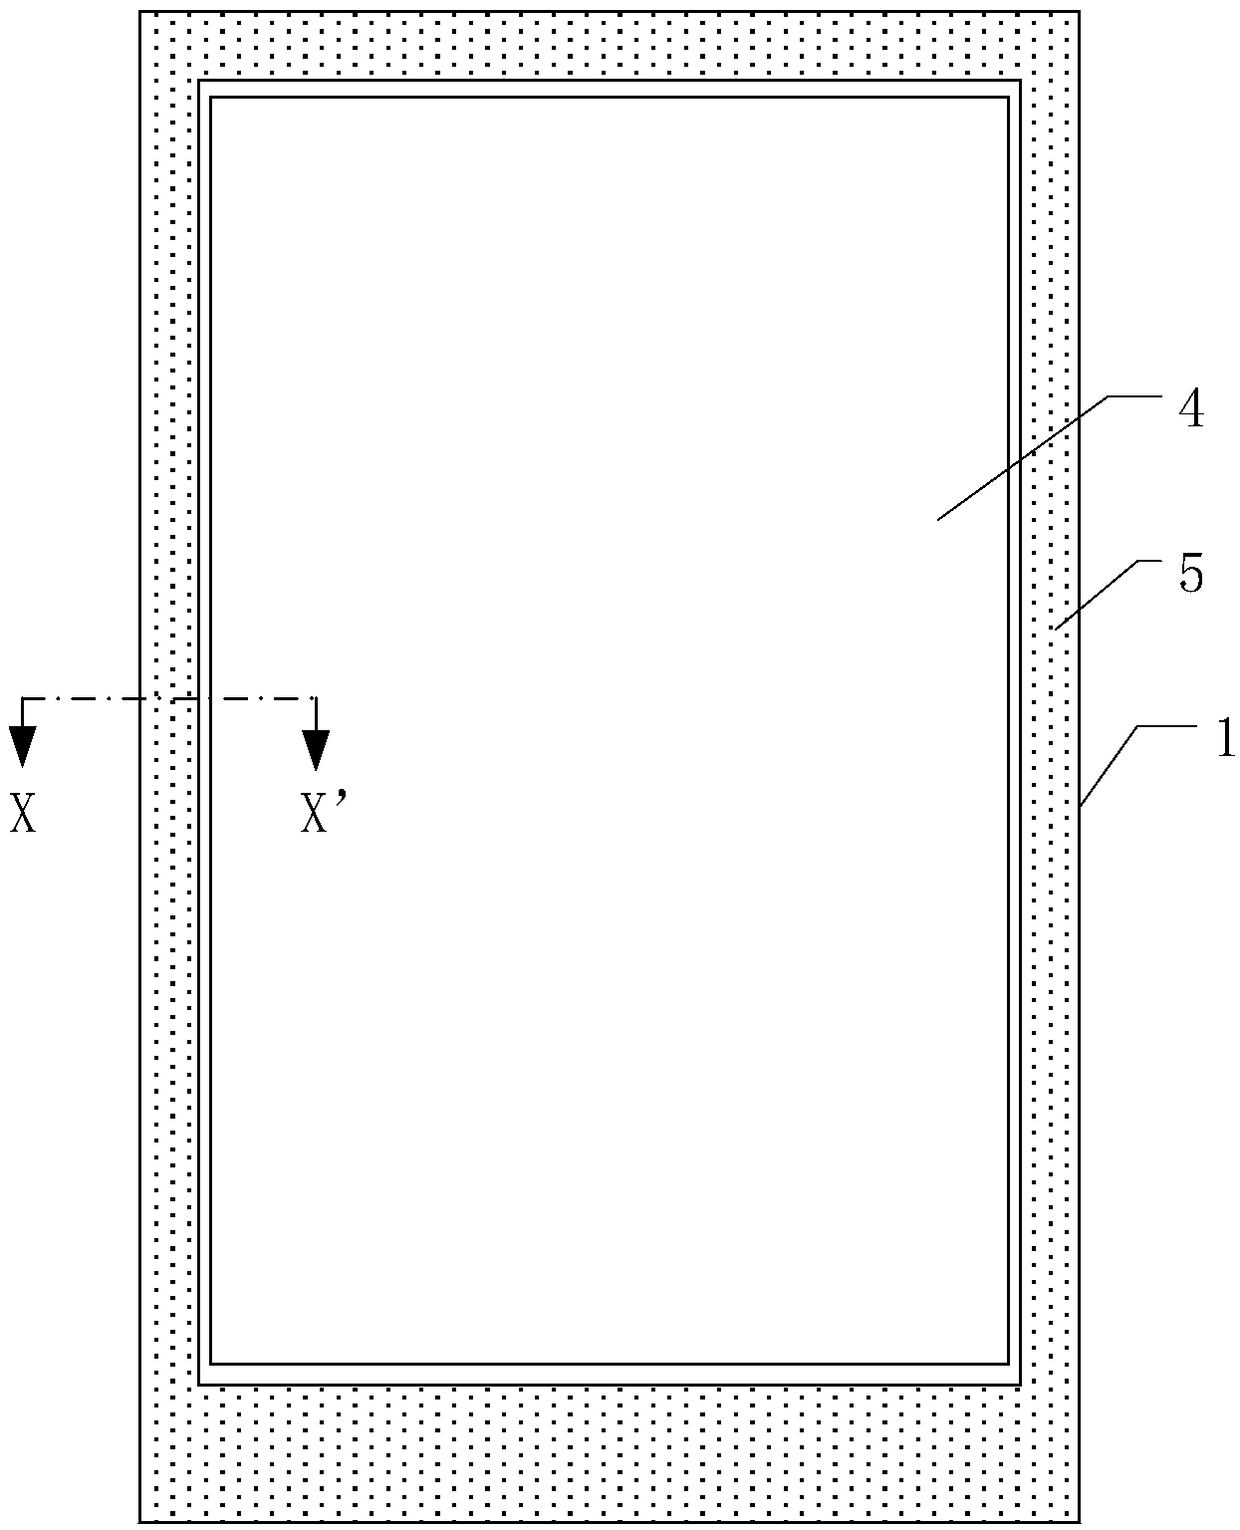 Display panel, display device, and manufacture method of display panel